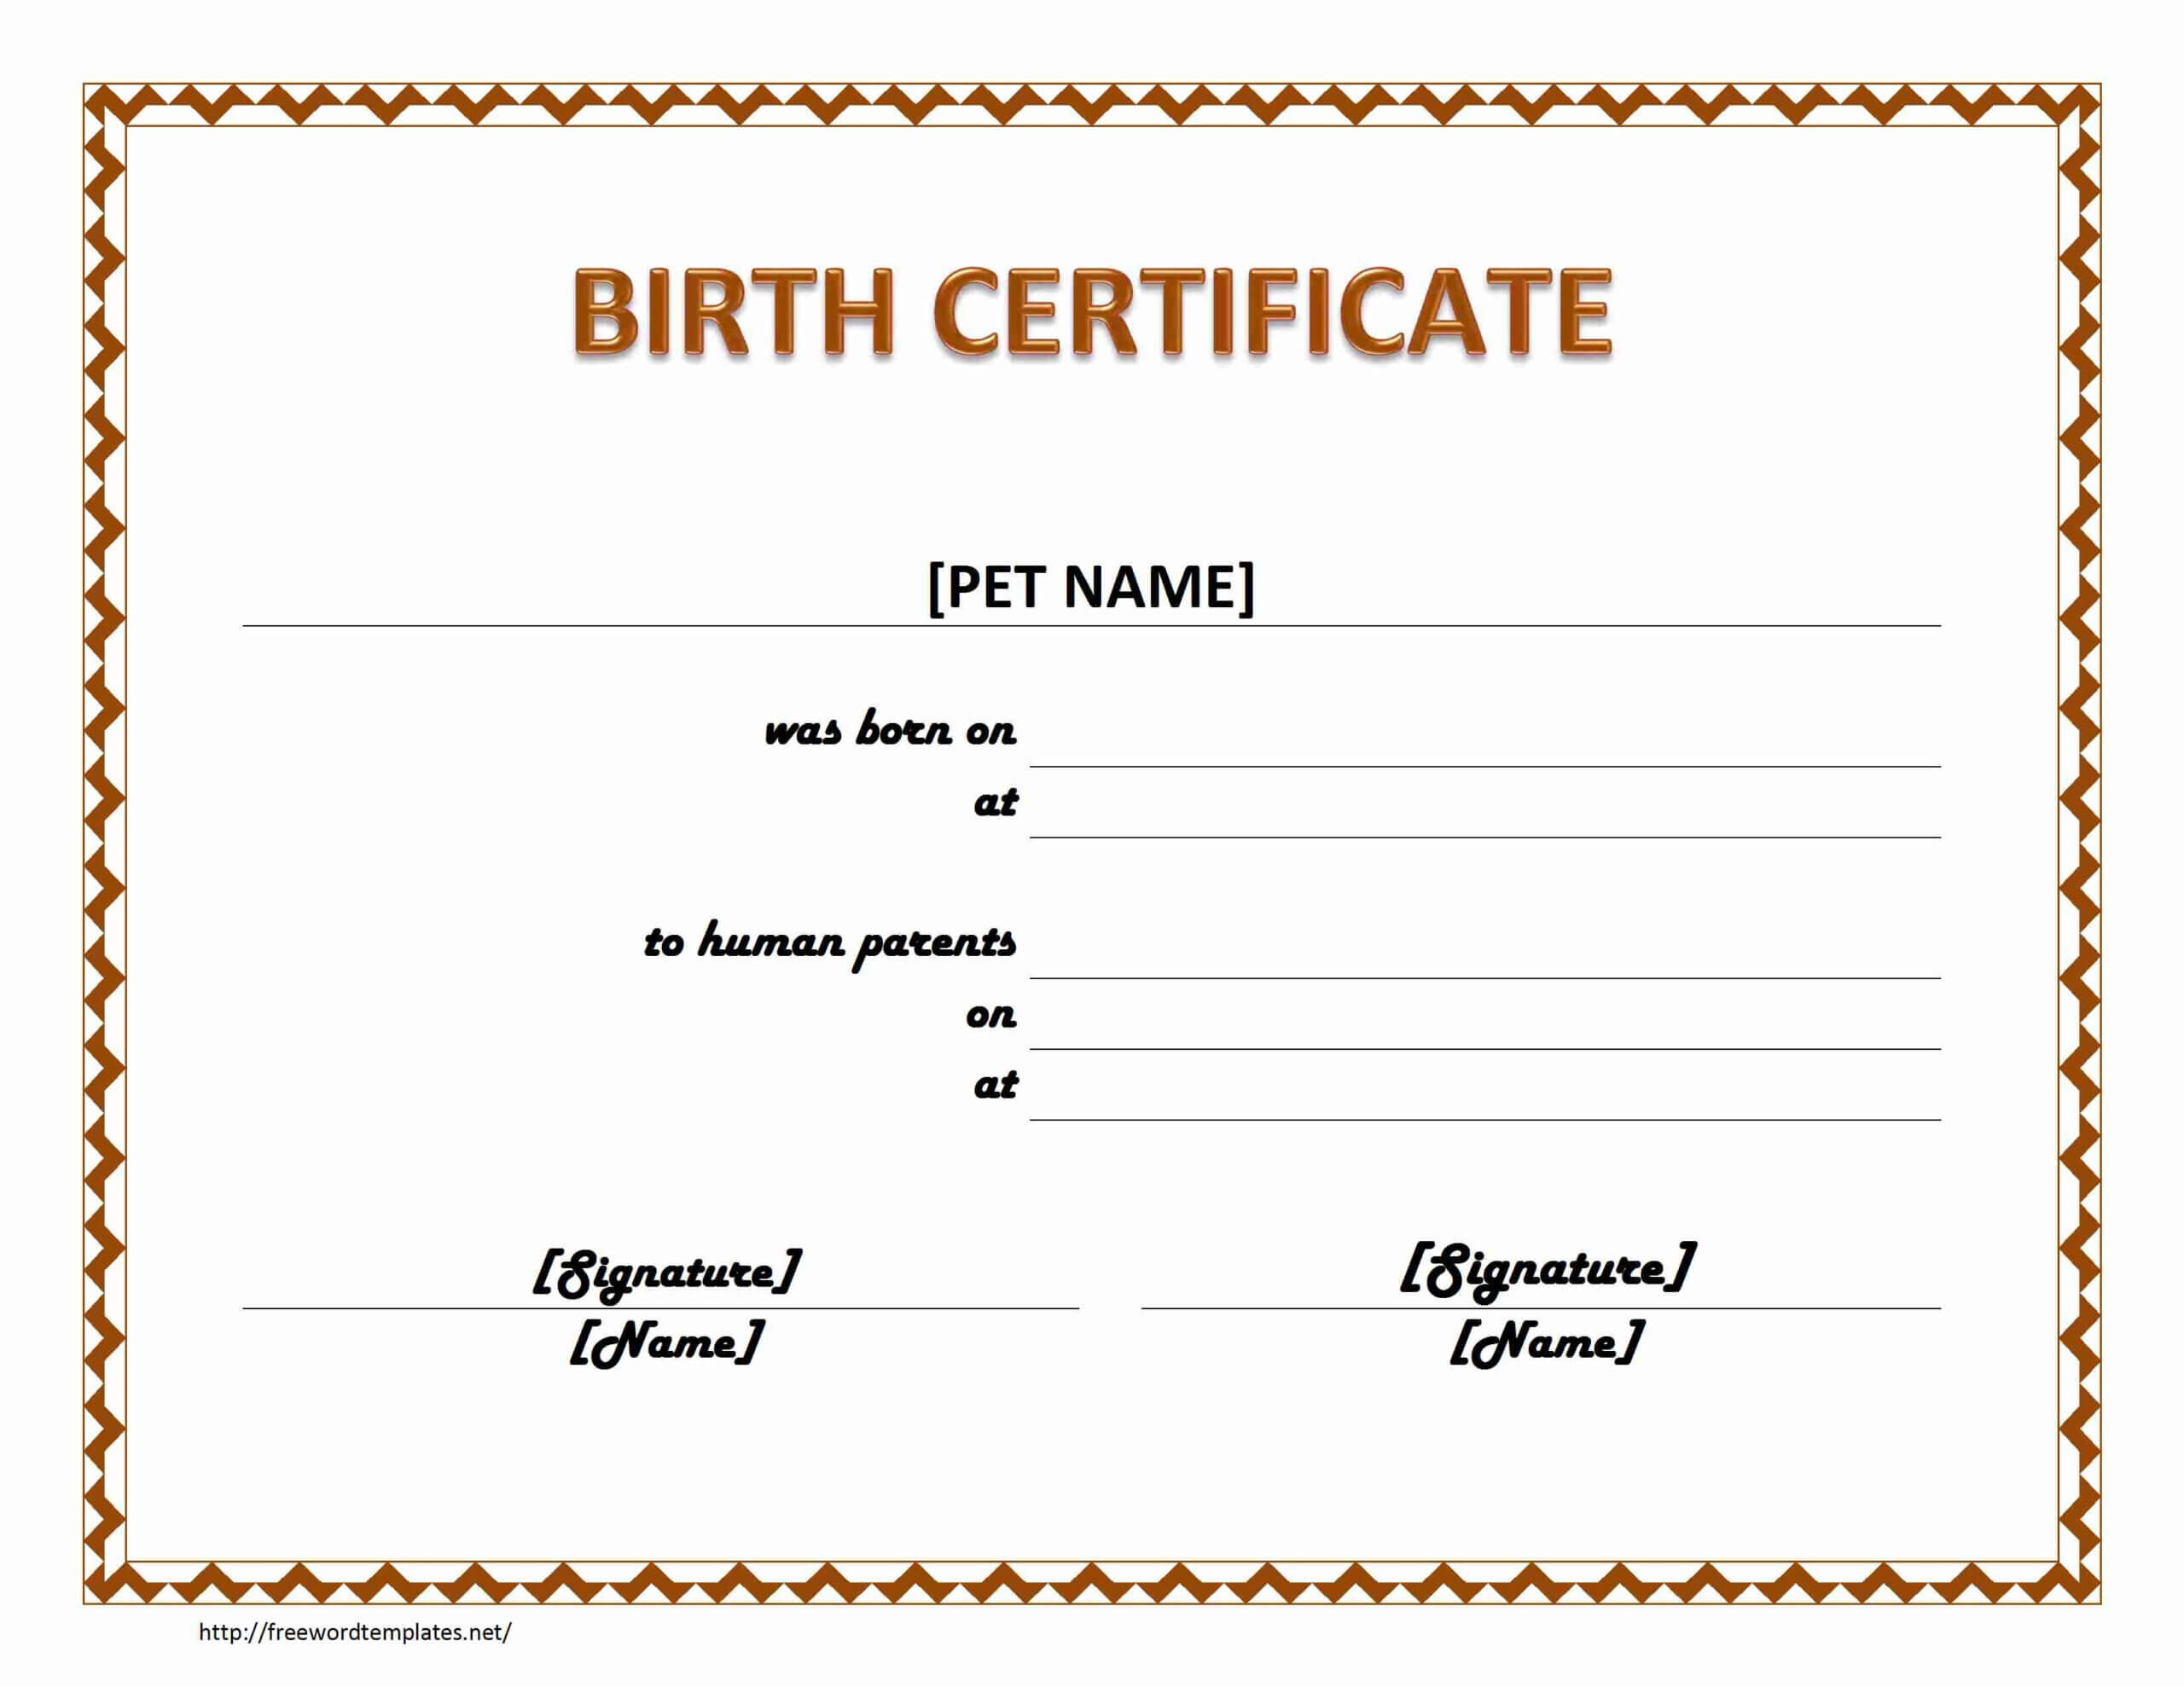 Pet Birth Certificate Maker | Pet Birth Certificate For Word Within Birth Certificate Templates For Word